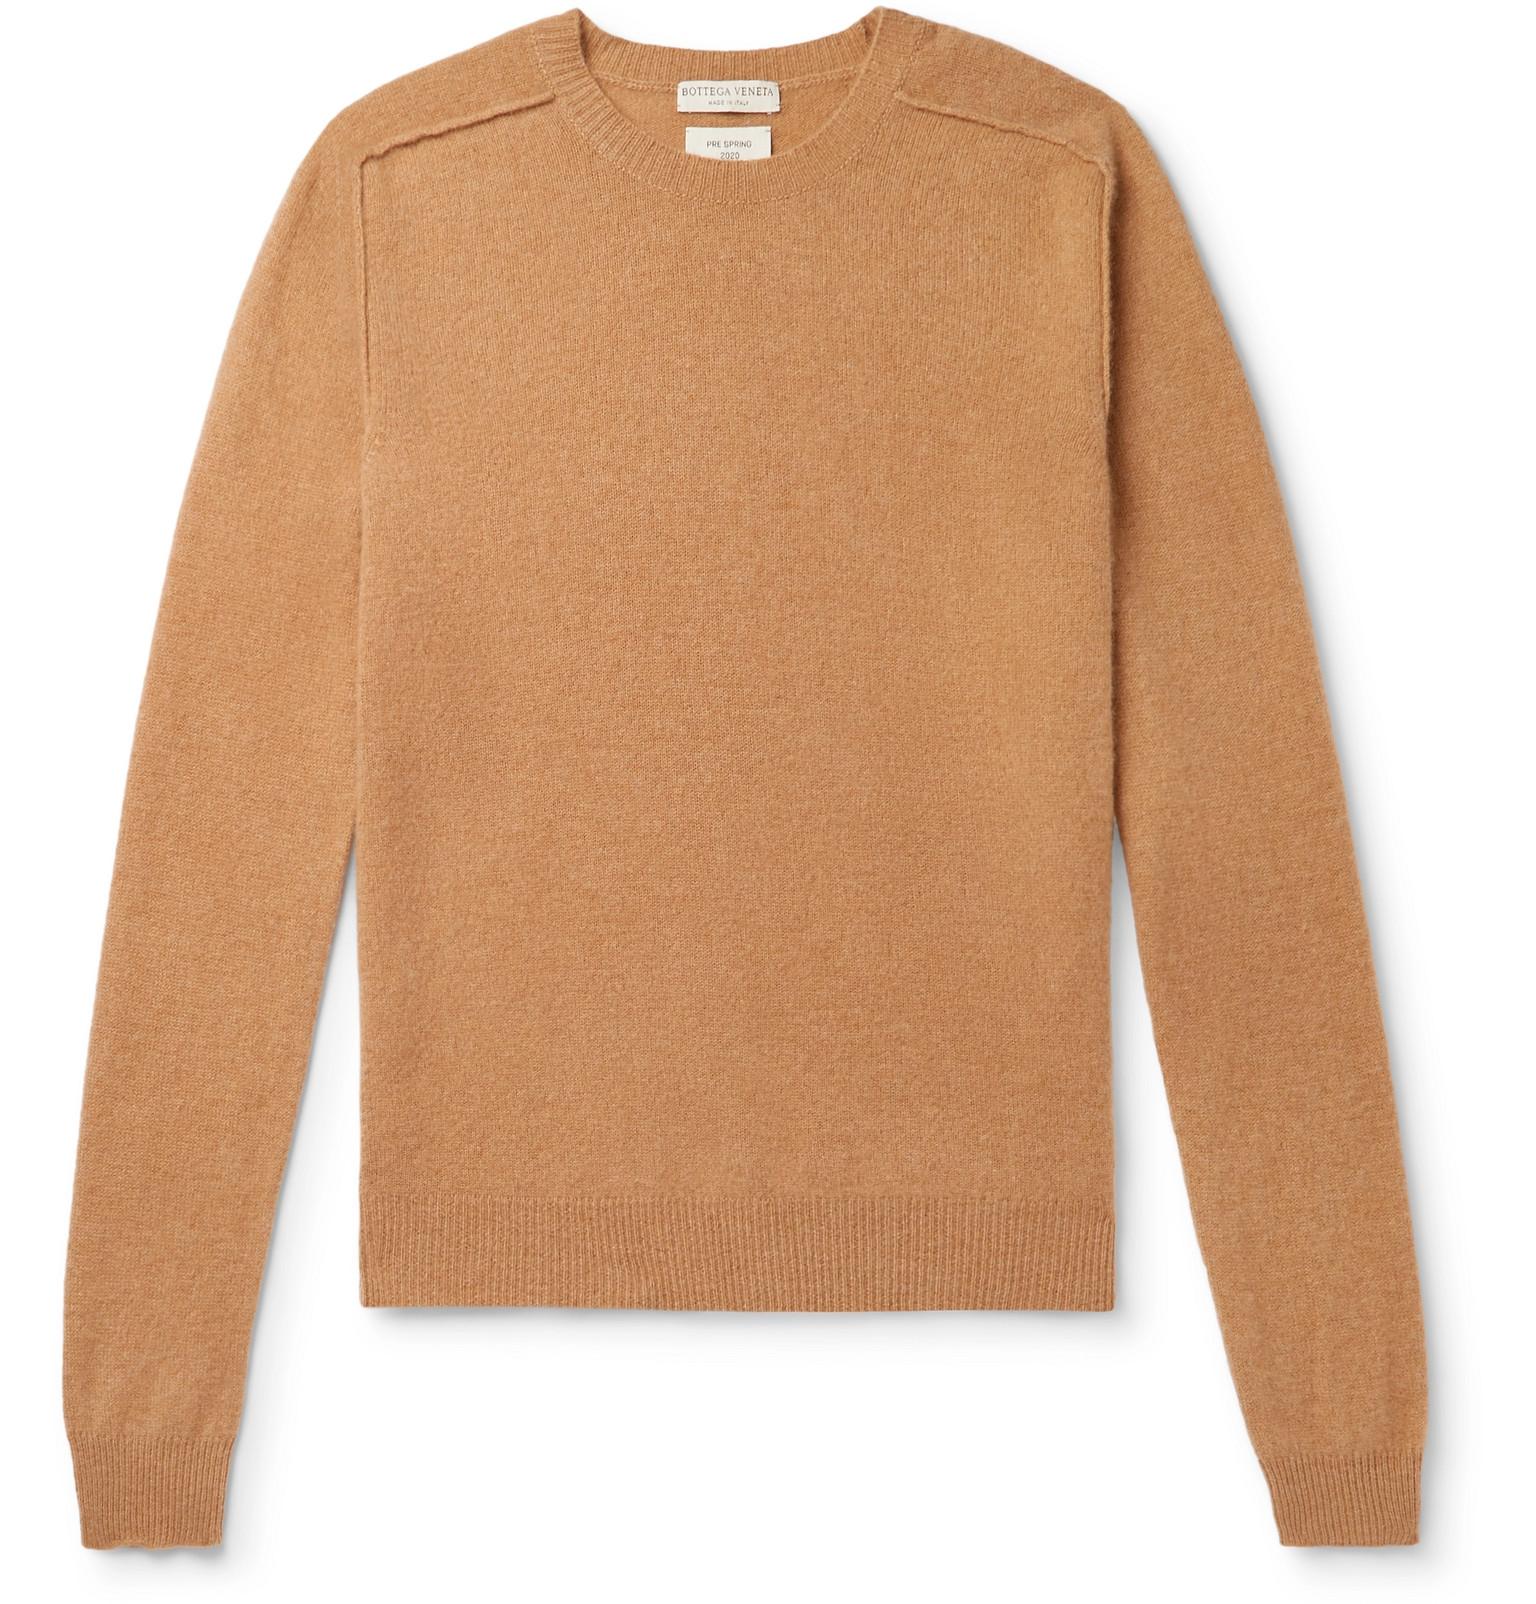 Bottega Veneta Cashmere Sweater for Men - Lyst